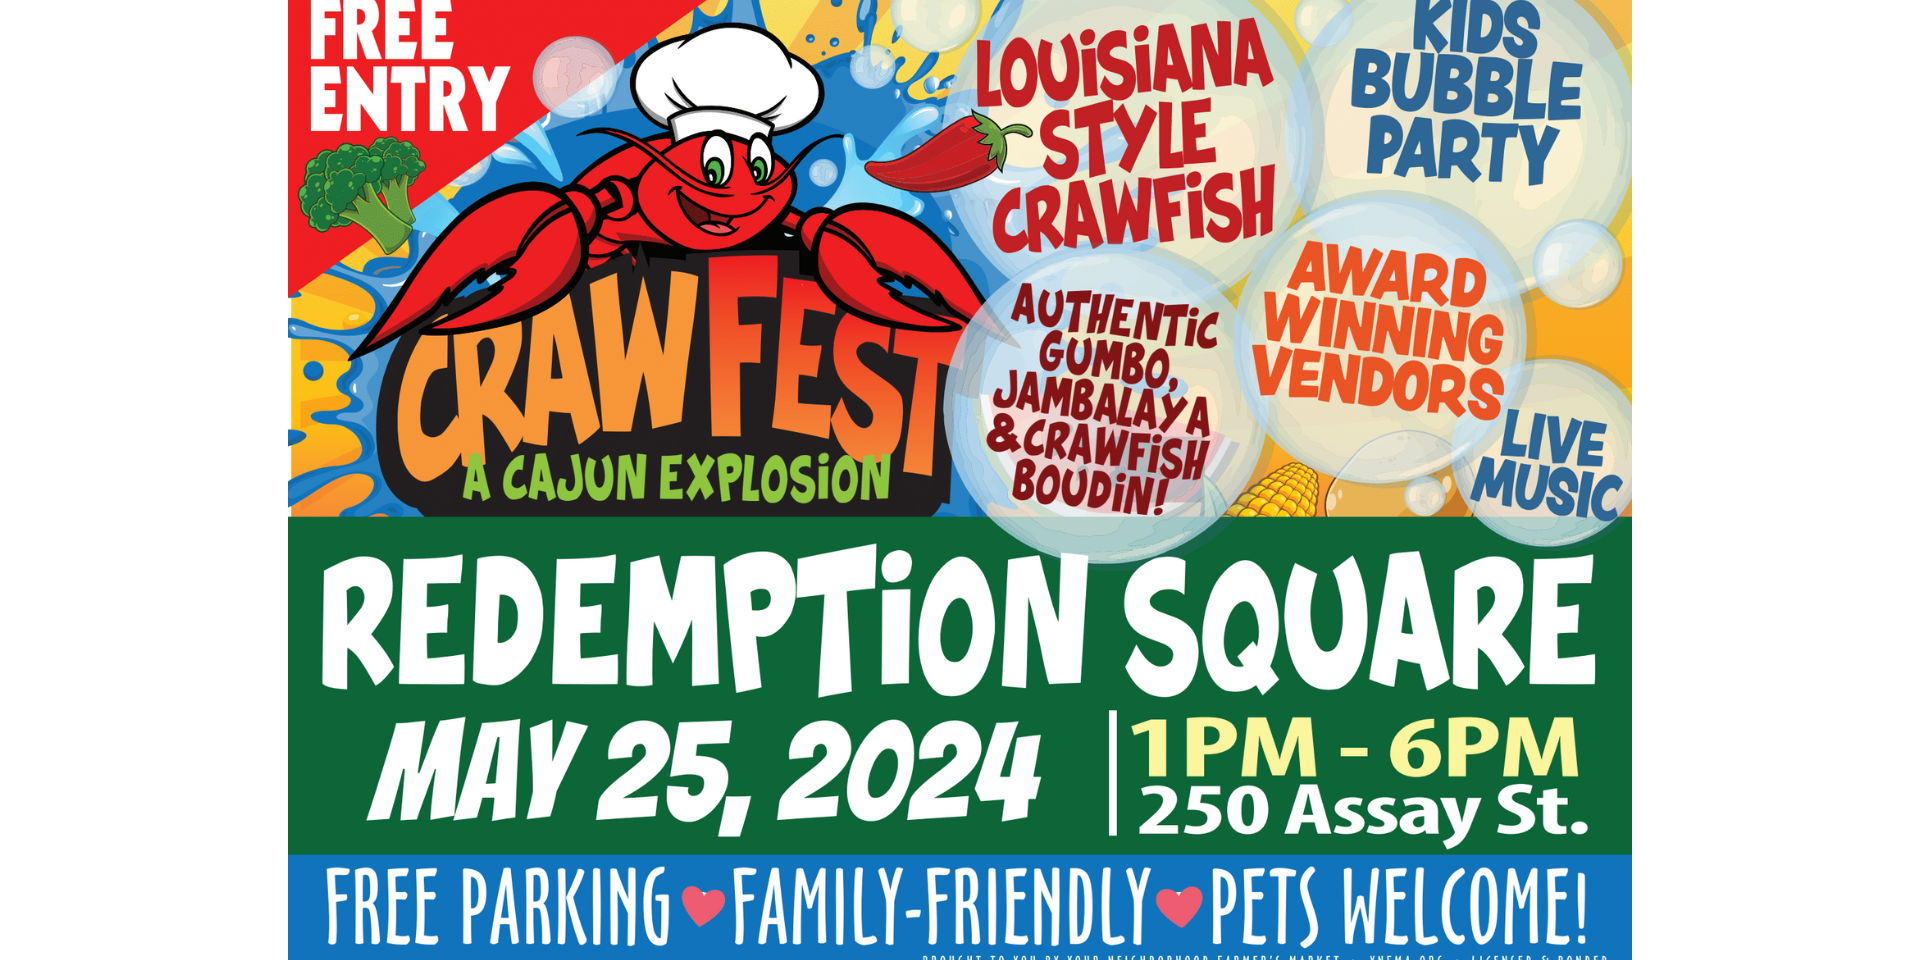 Redemption Crawfest 2024 promotional image